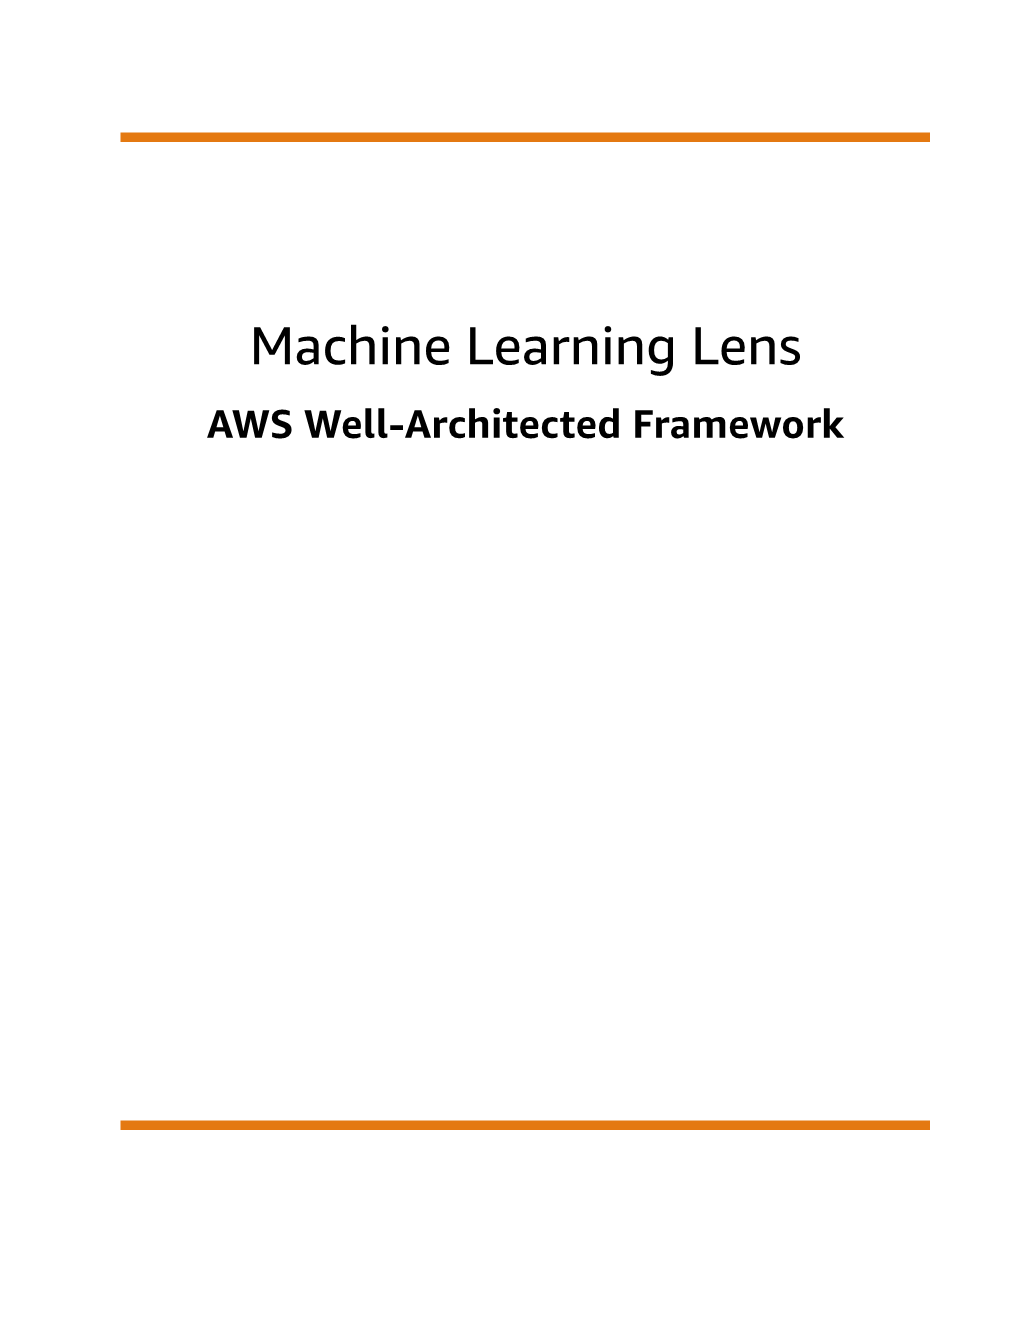 Machine Learning Lens AWS Well-Architected Framework Machine Learning Lens AWS Well-Architected Framework